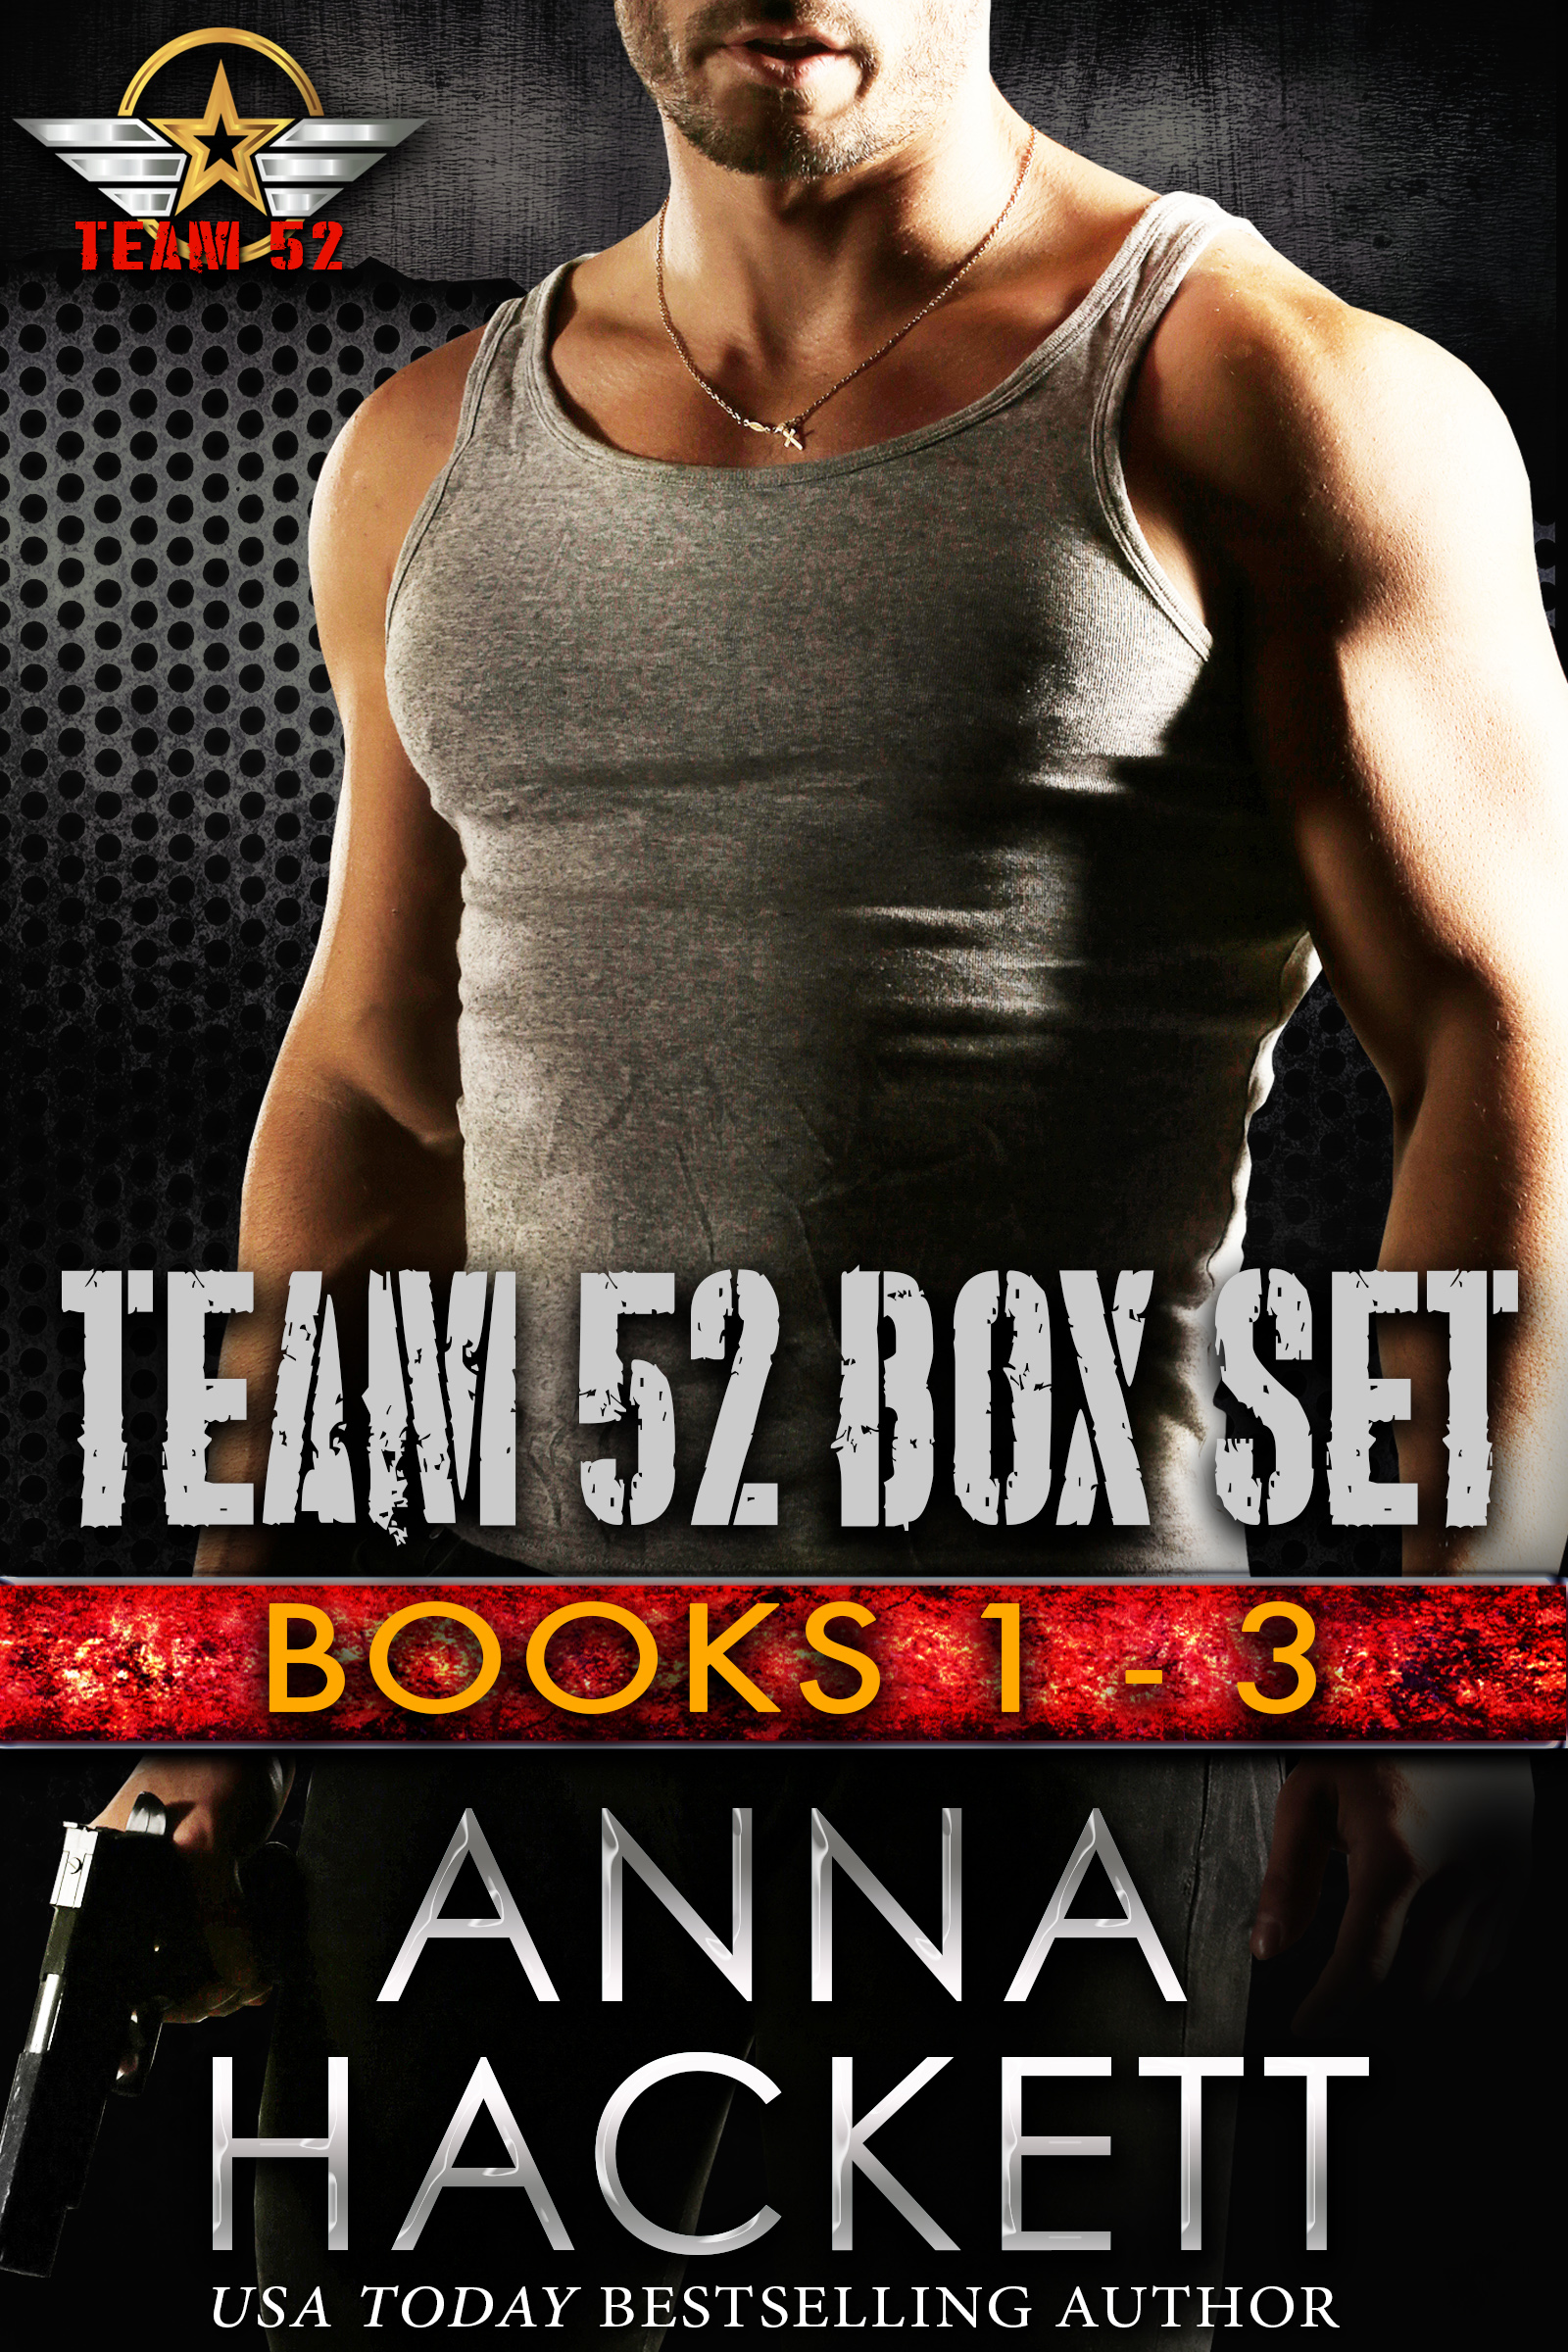 Team 52 Box Set Books 1 - 3